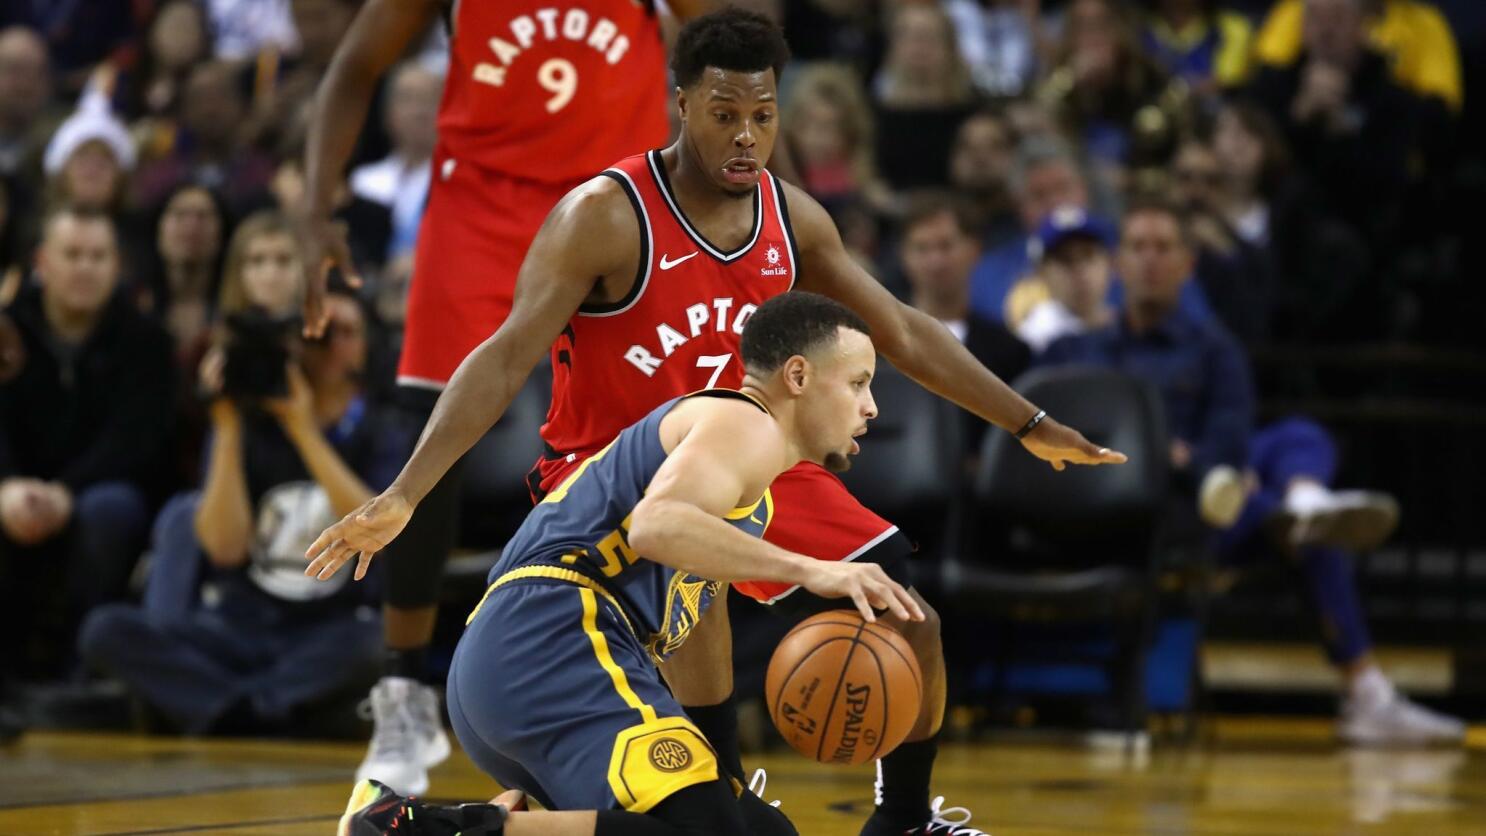 Basketball news - Toronto Raptors beat Golden State Warriors to